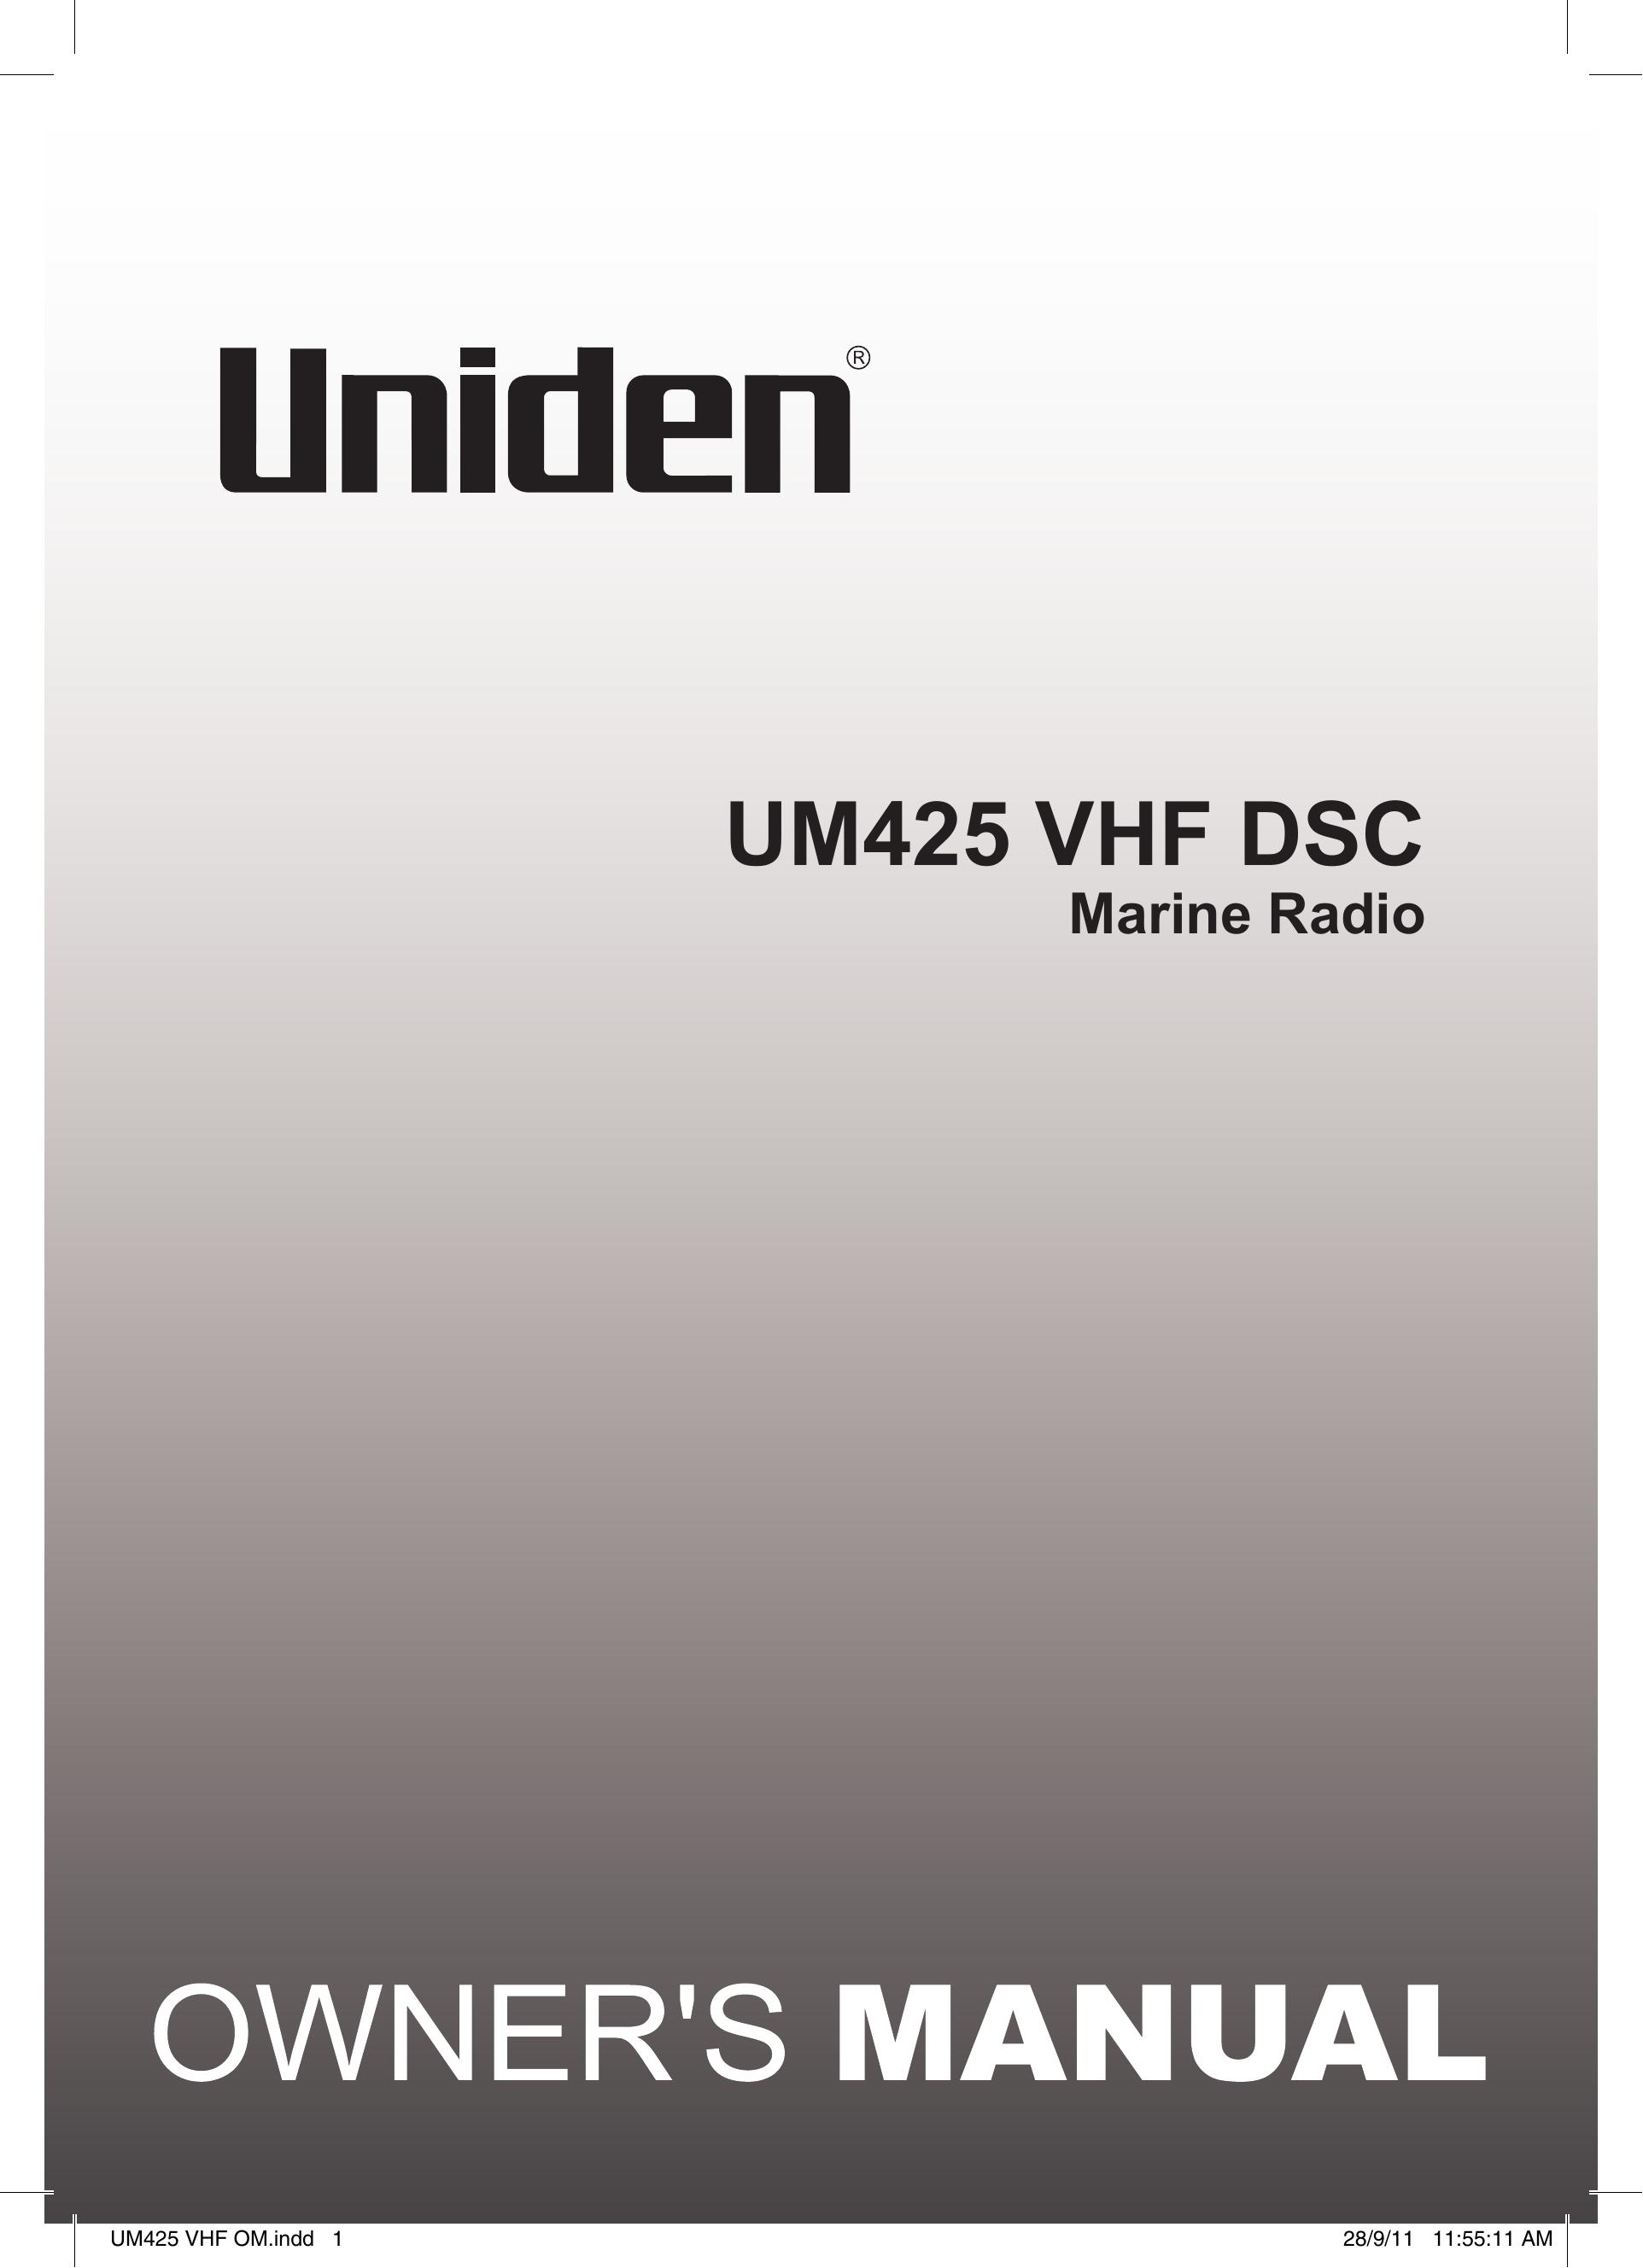 Uniden UM425 VHF DSC Marine Radio User Manual